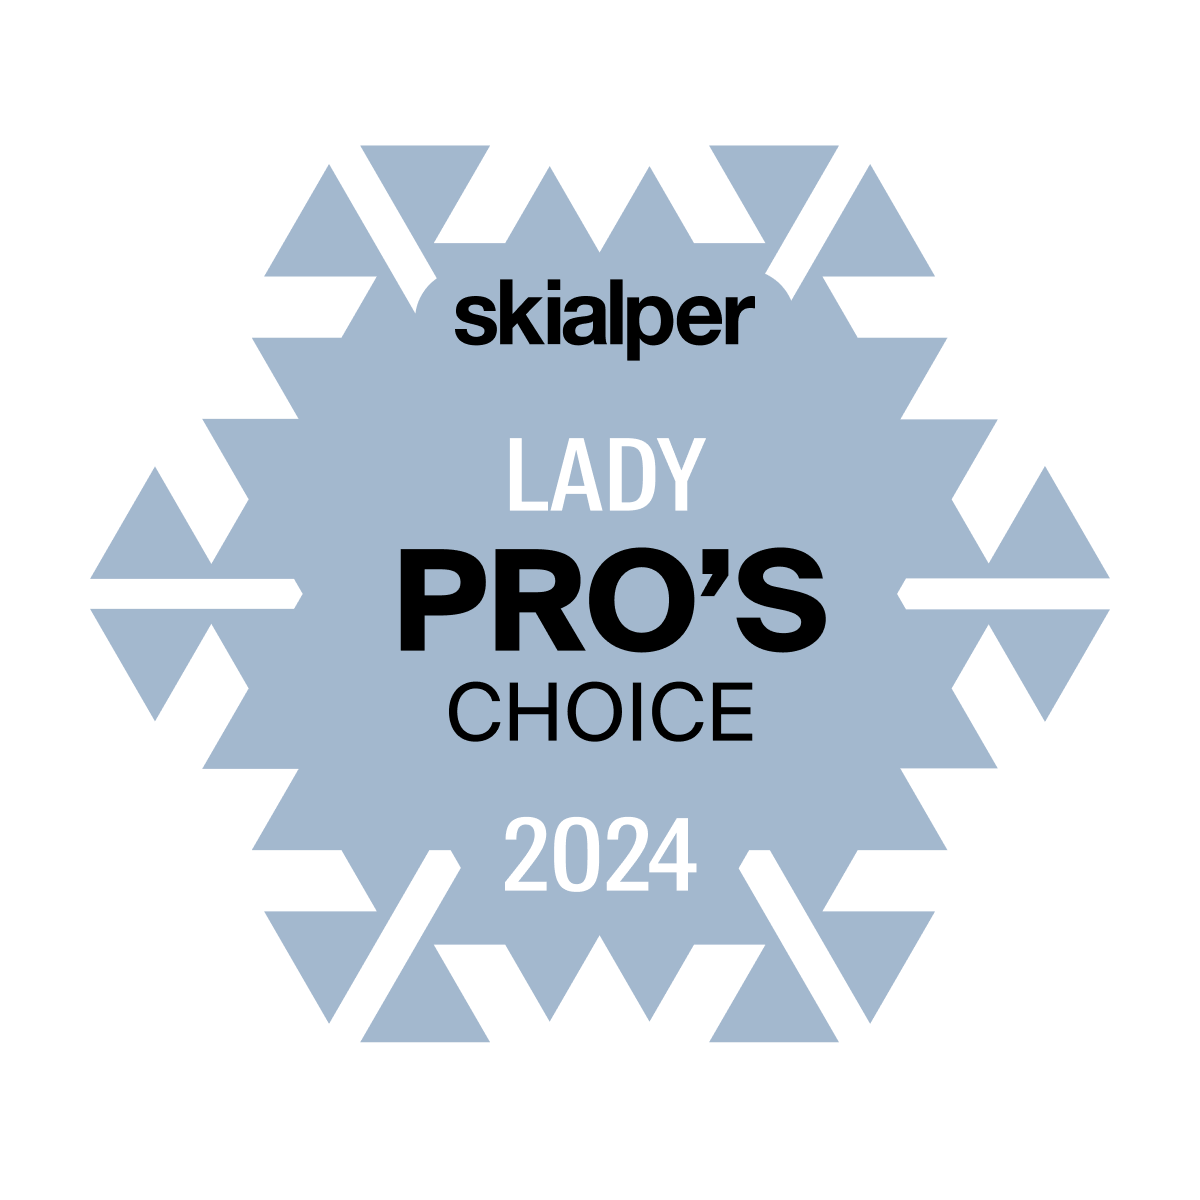 Pro's choice Lady